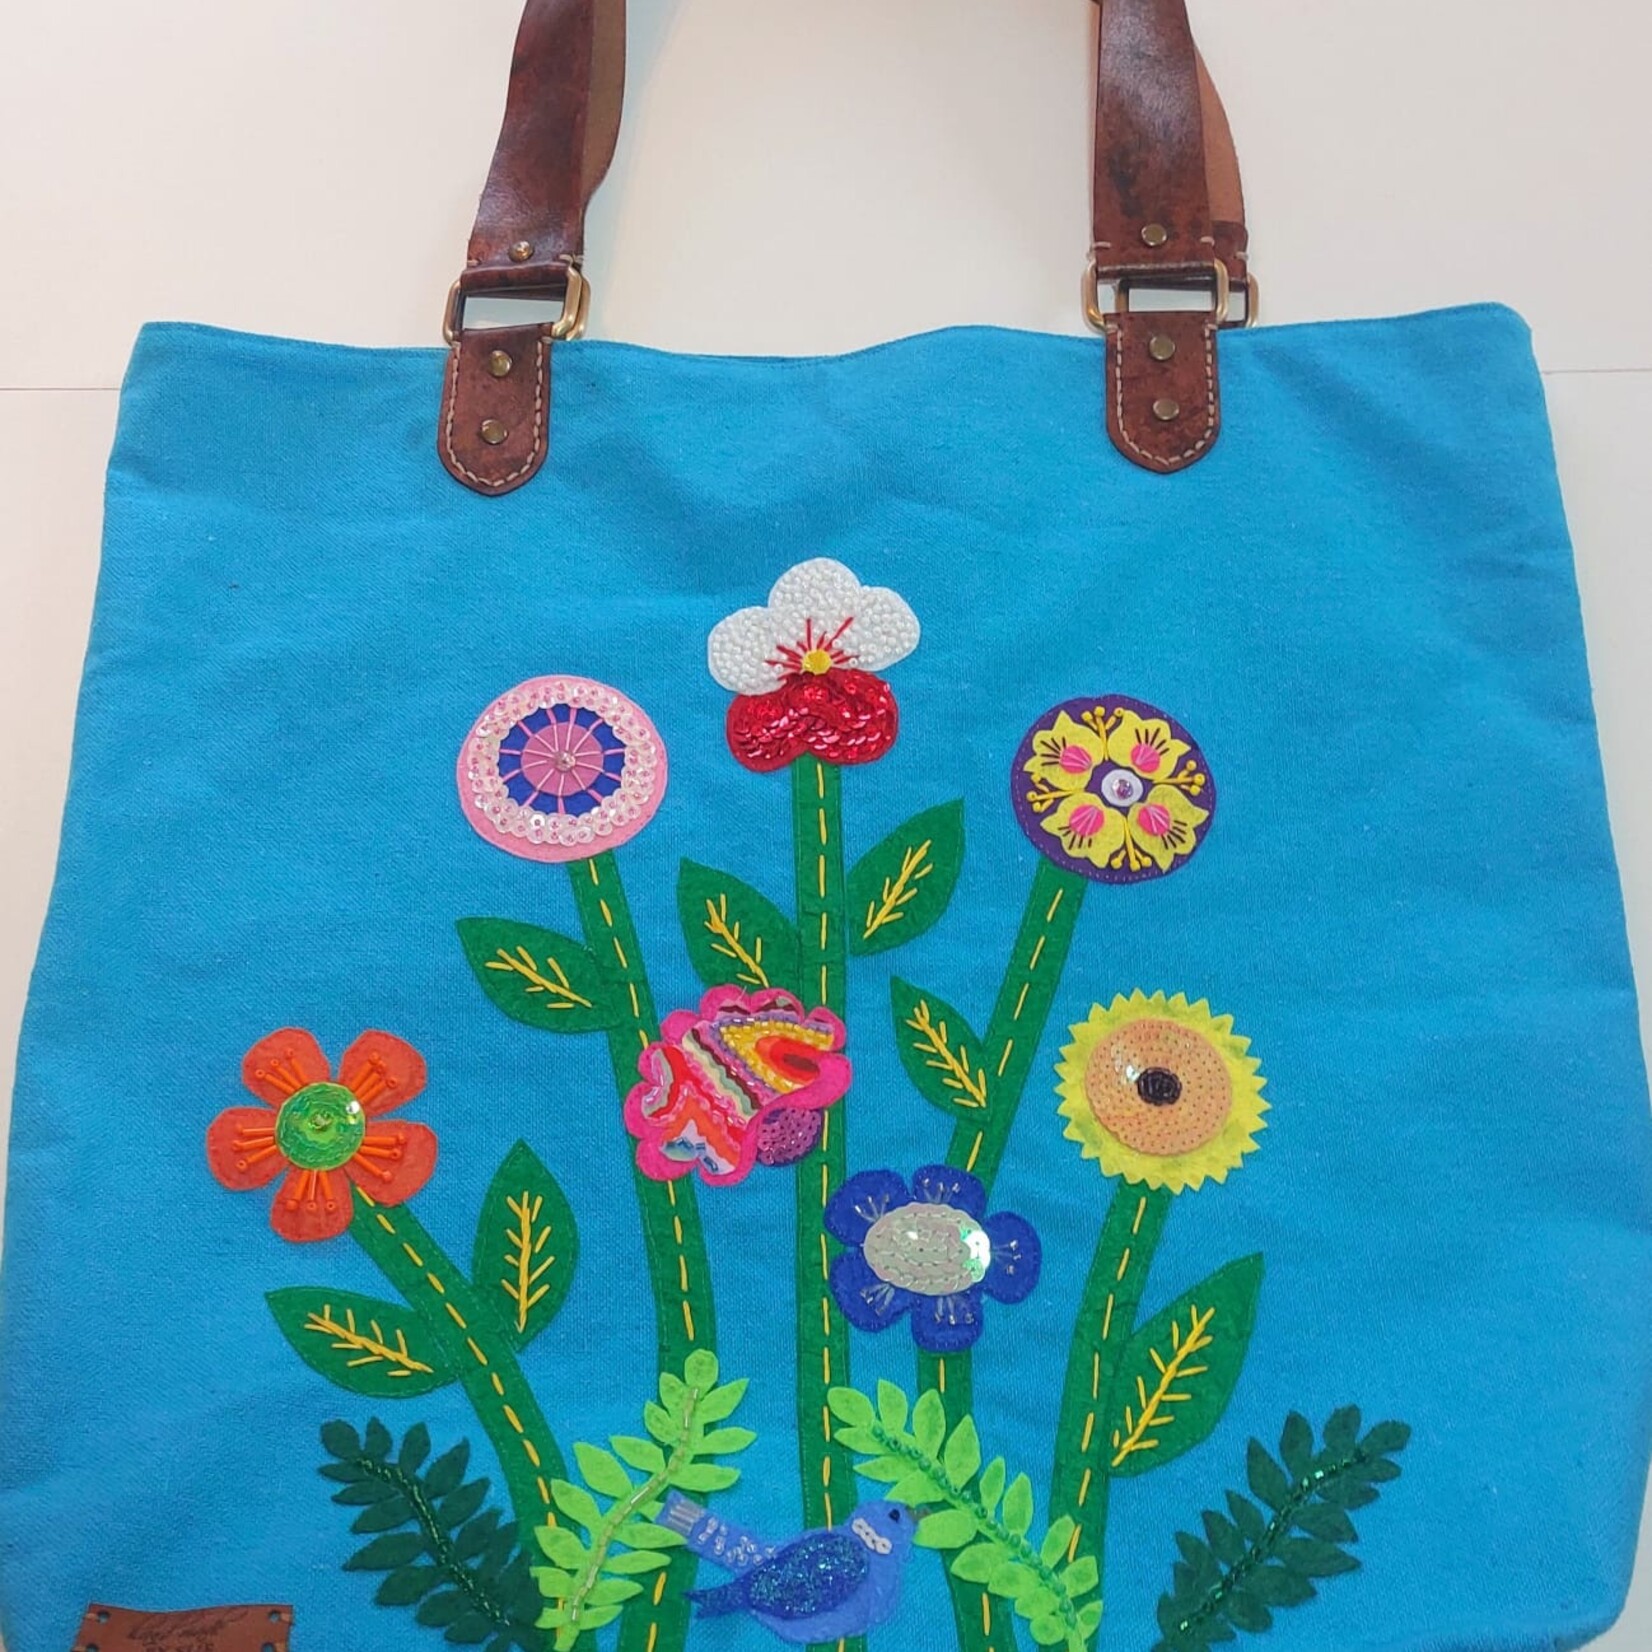 Handmade by Sue Handbag with flowers and a bird